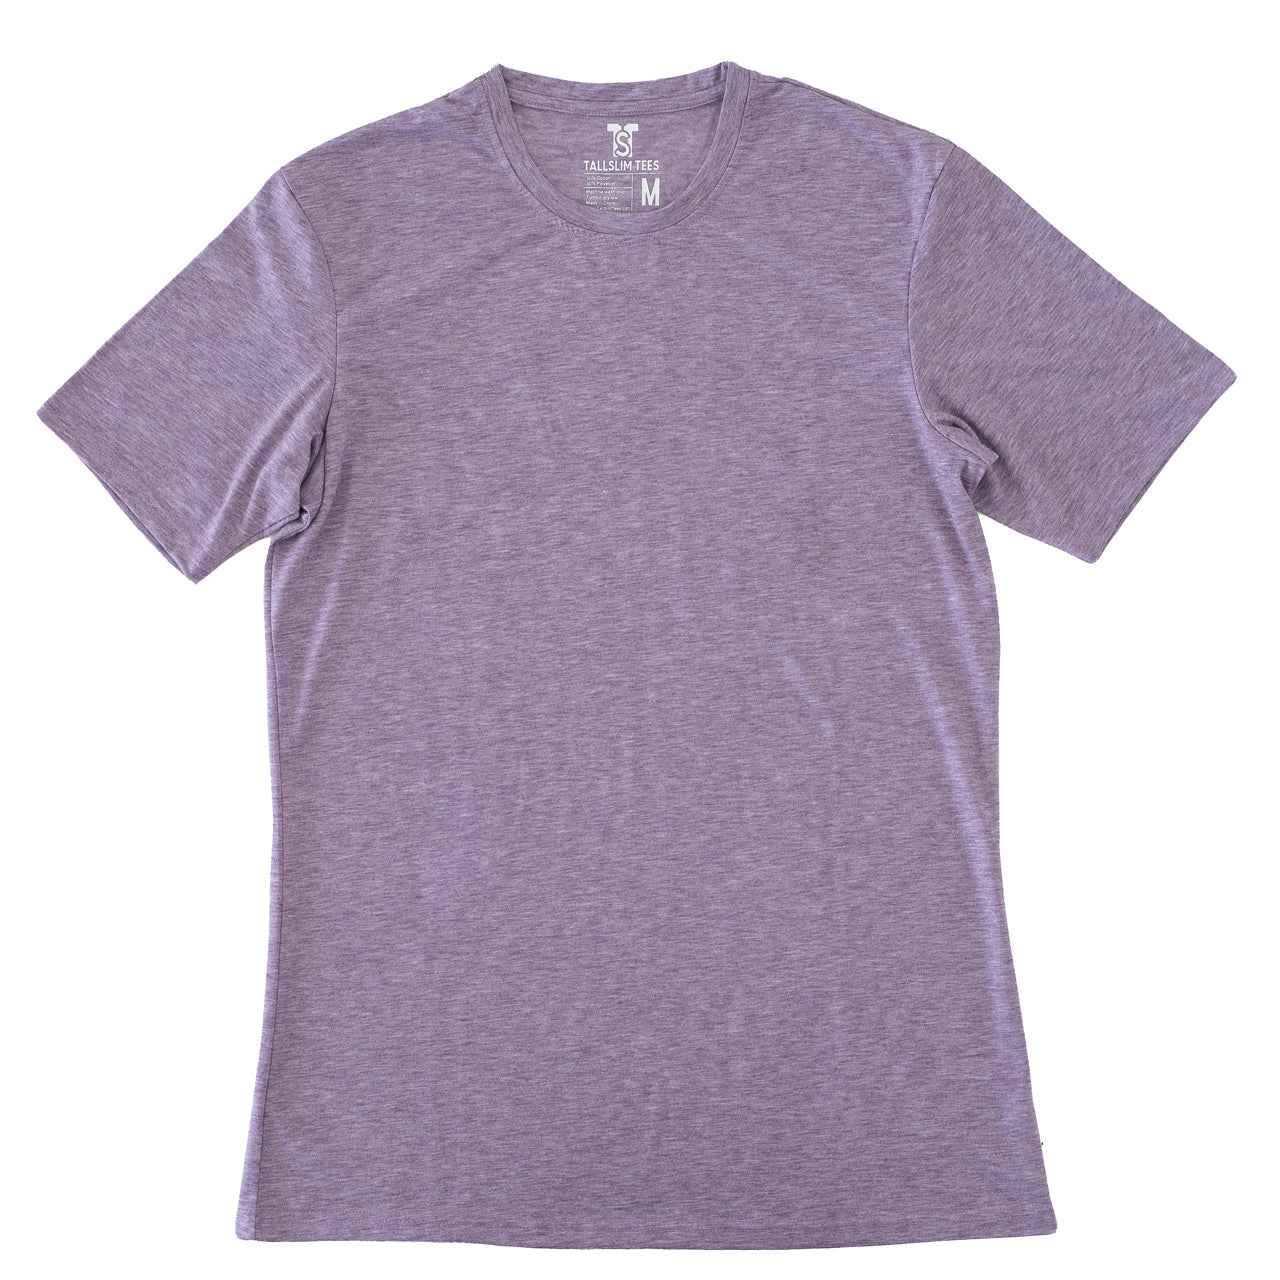 Purple Crew Neck Shirt for Tall Slim Men